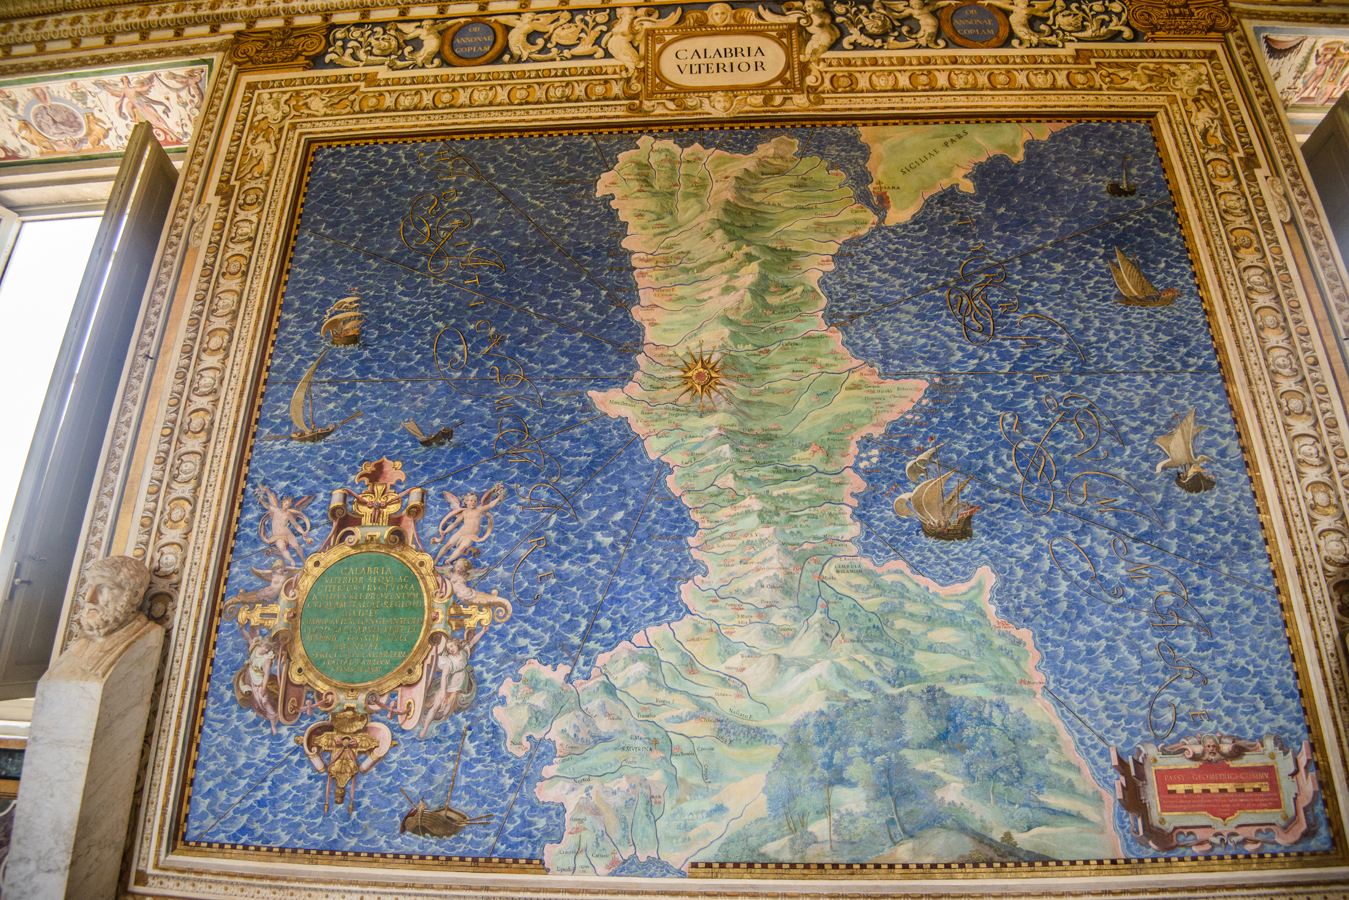 Vatikán - tapisérie - mapa Kalábrie a Messinské úžiny